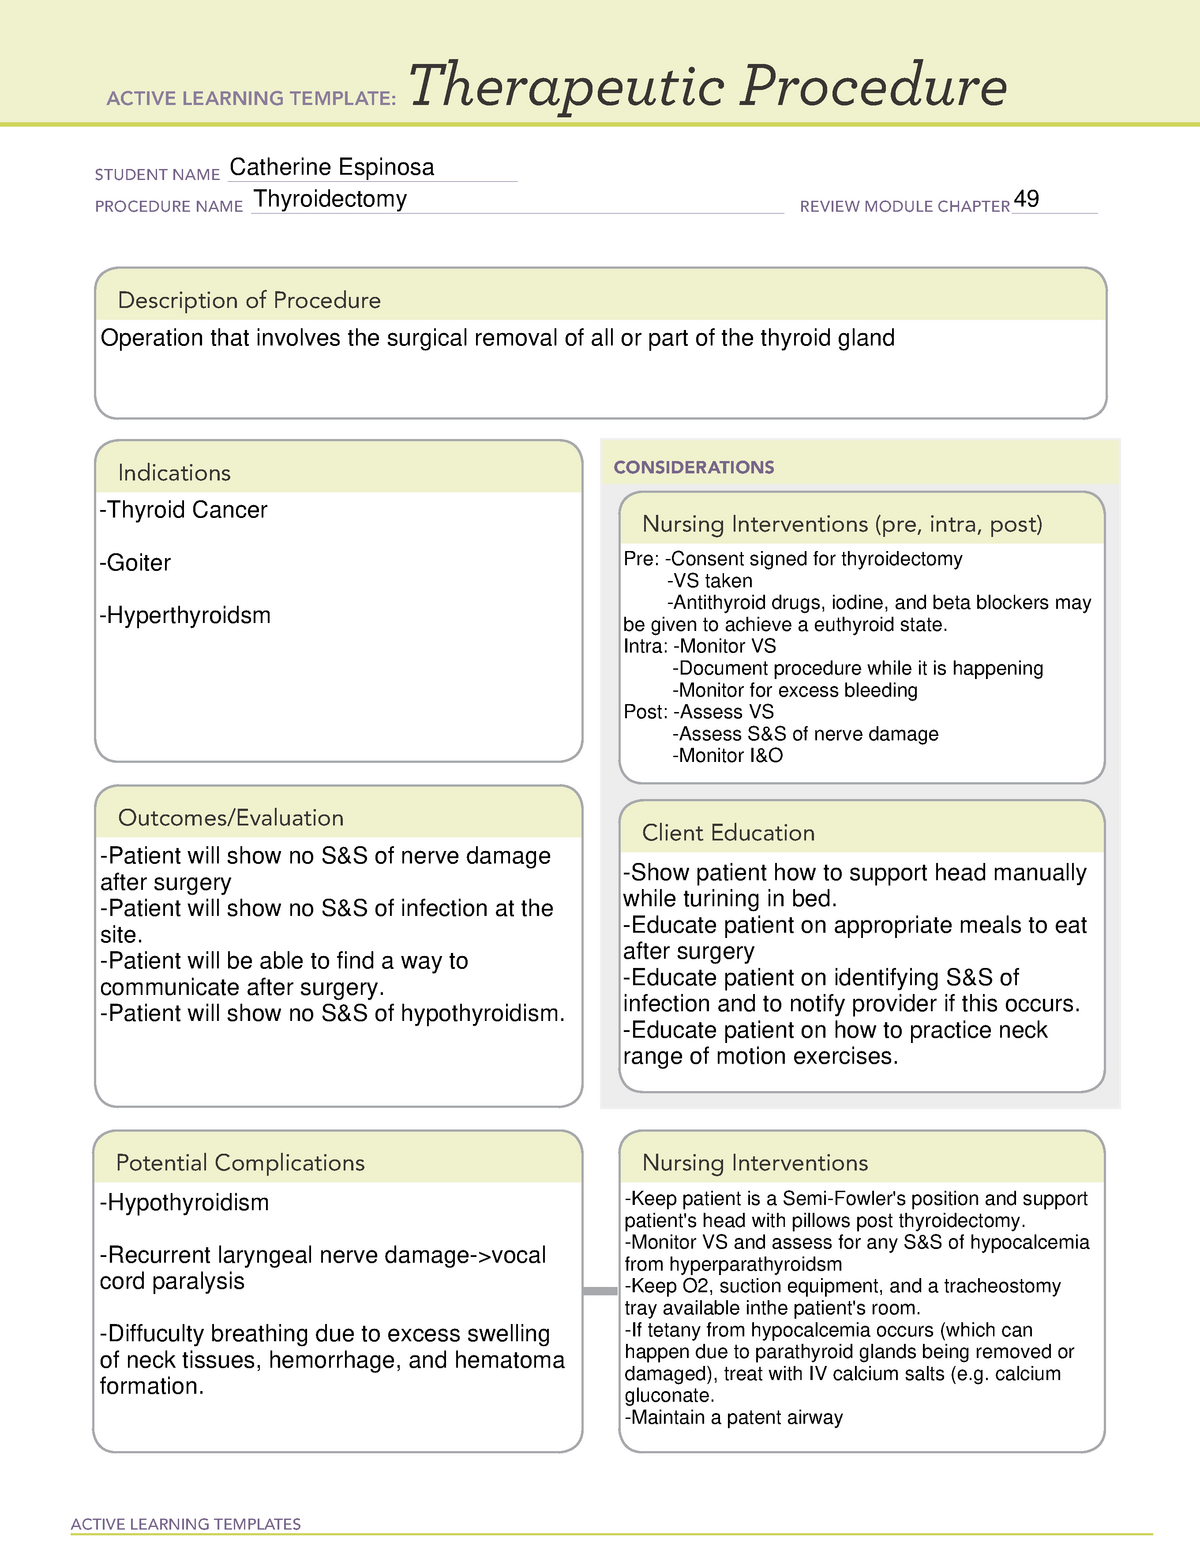 ati-therapeutic-procedure-hemodialysis-active-learning-templates-vrogue